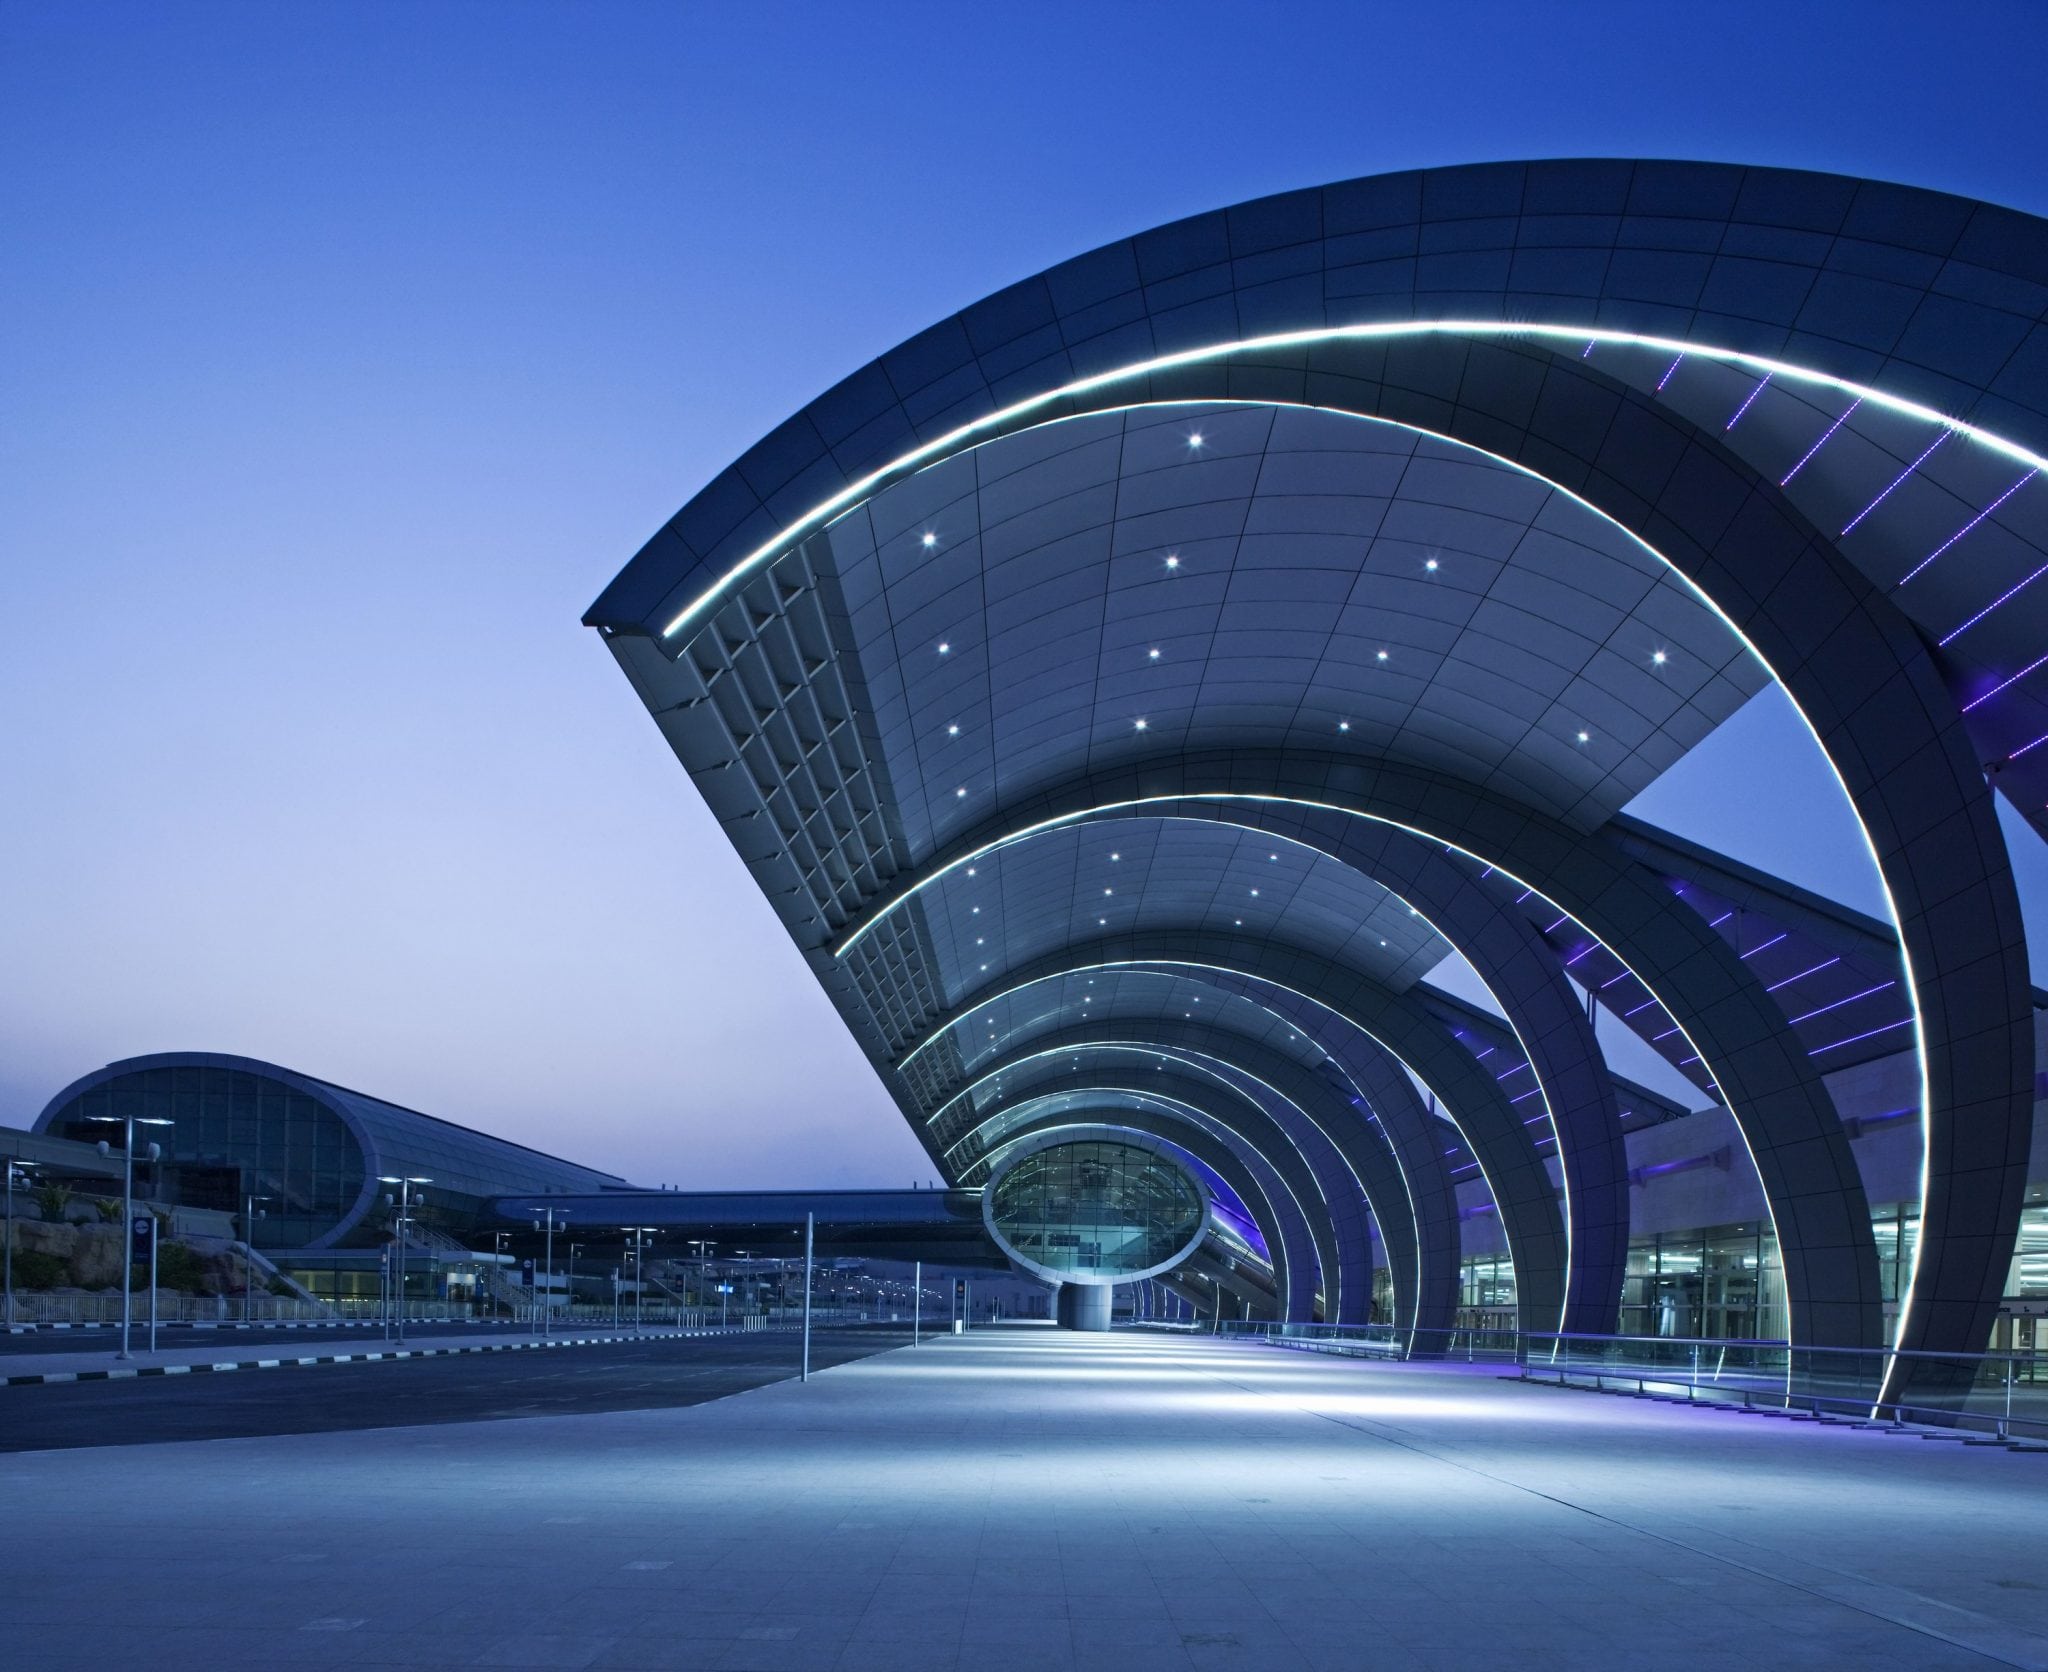 United Arab Emirates T3 designed by architect Paul Andreu.